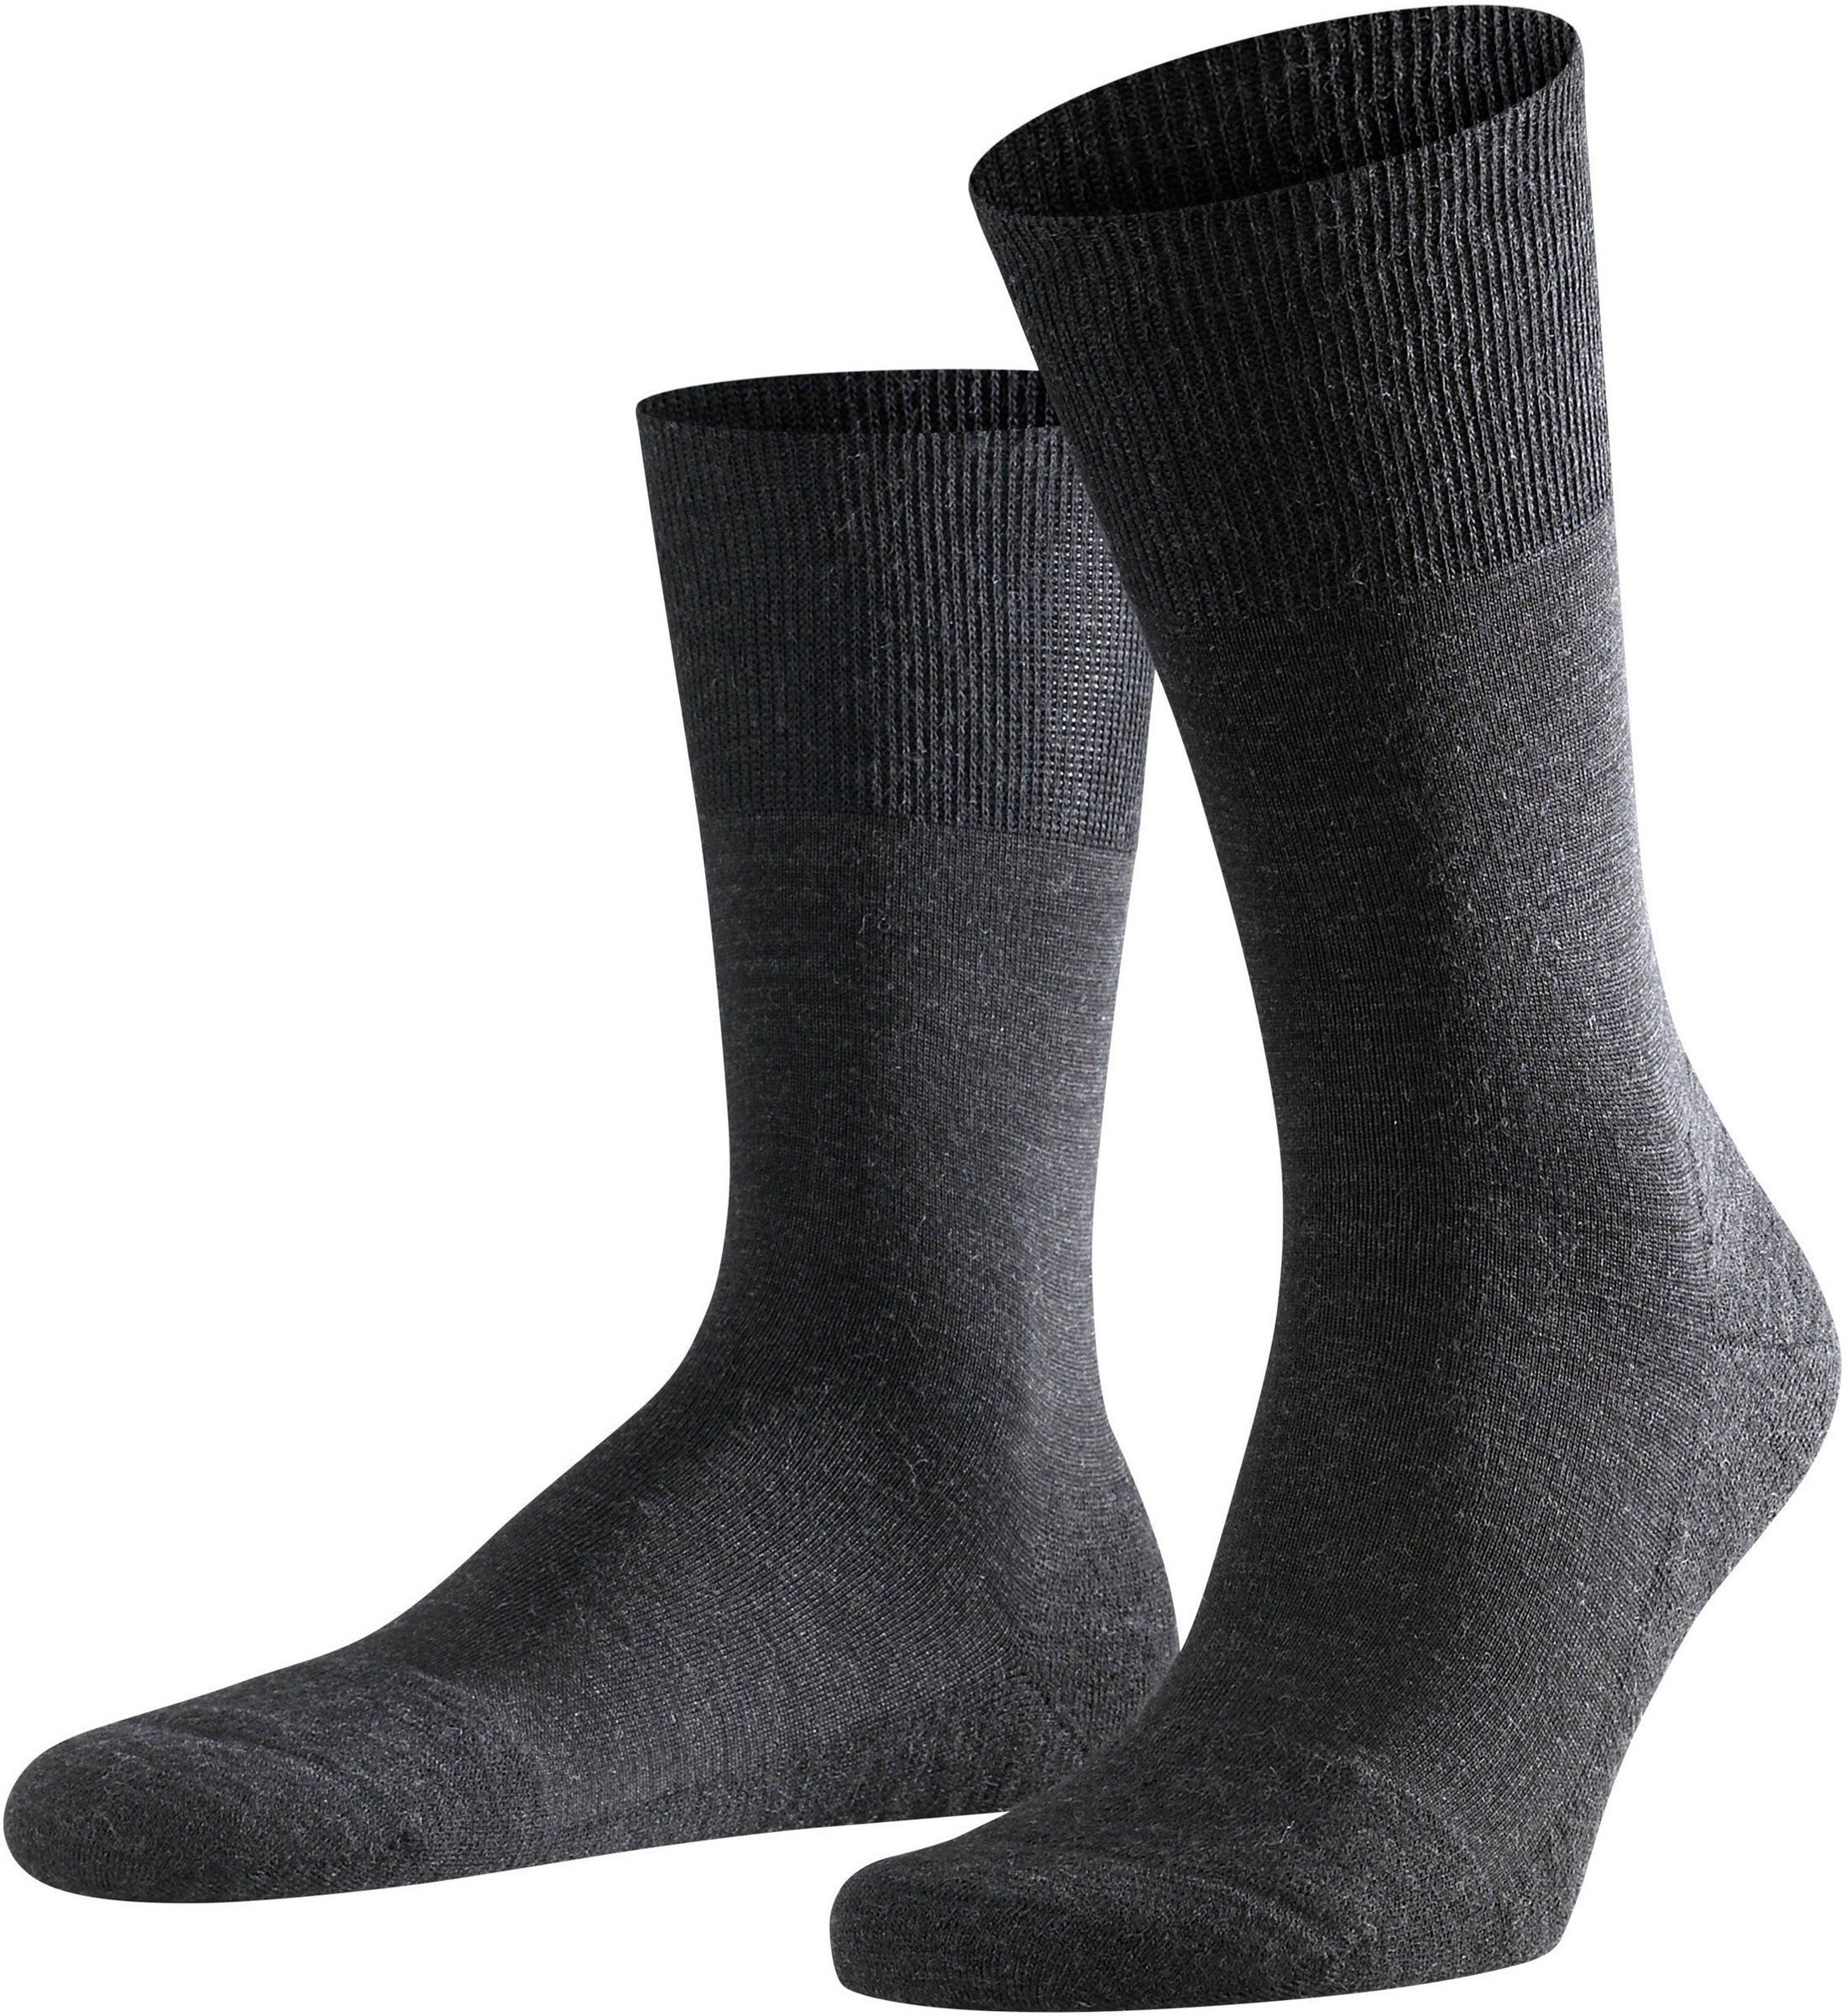 Falke Airport PLUS Socks Asphalt 3080 Dark Grey Grey size 39-40